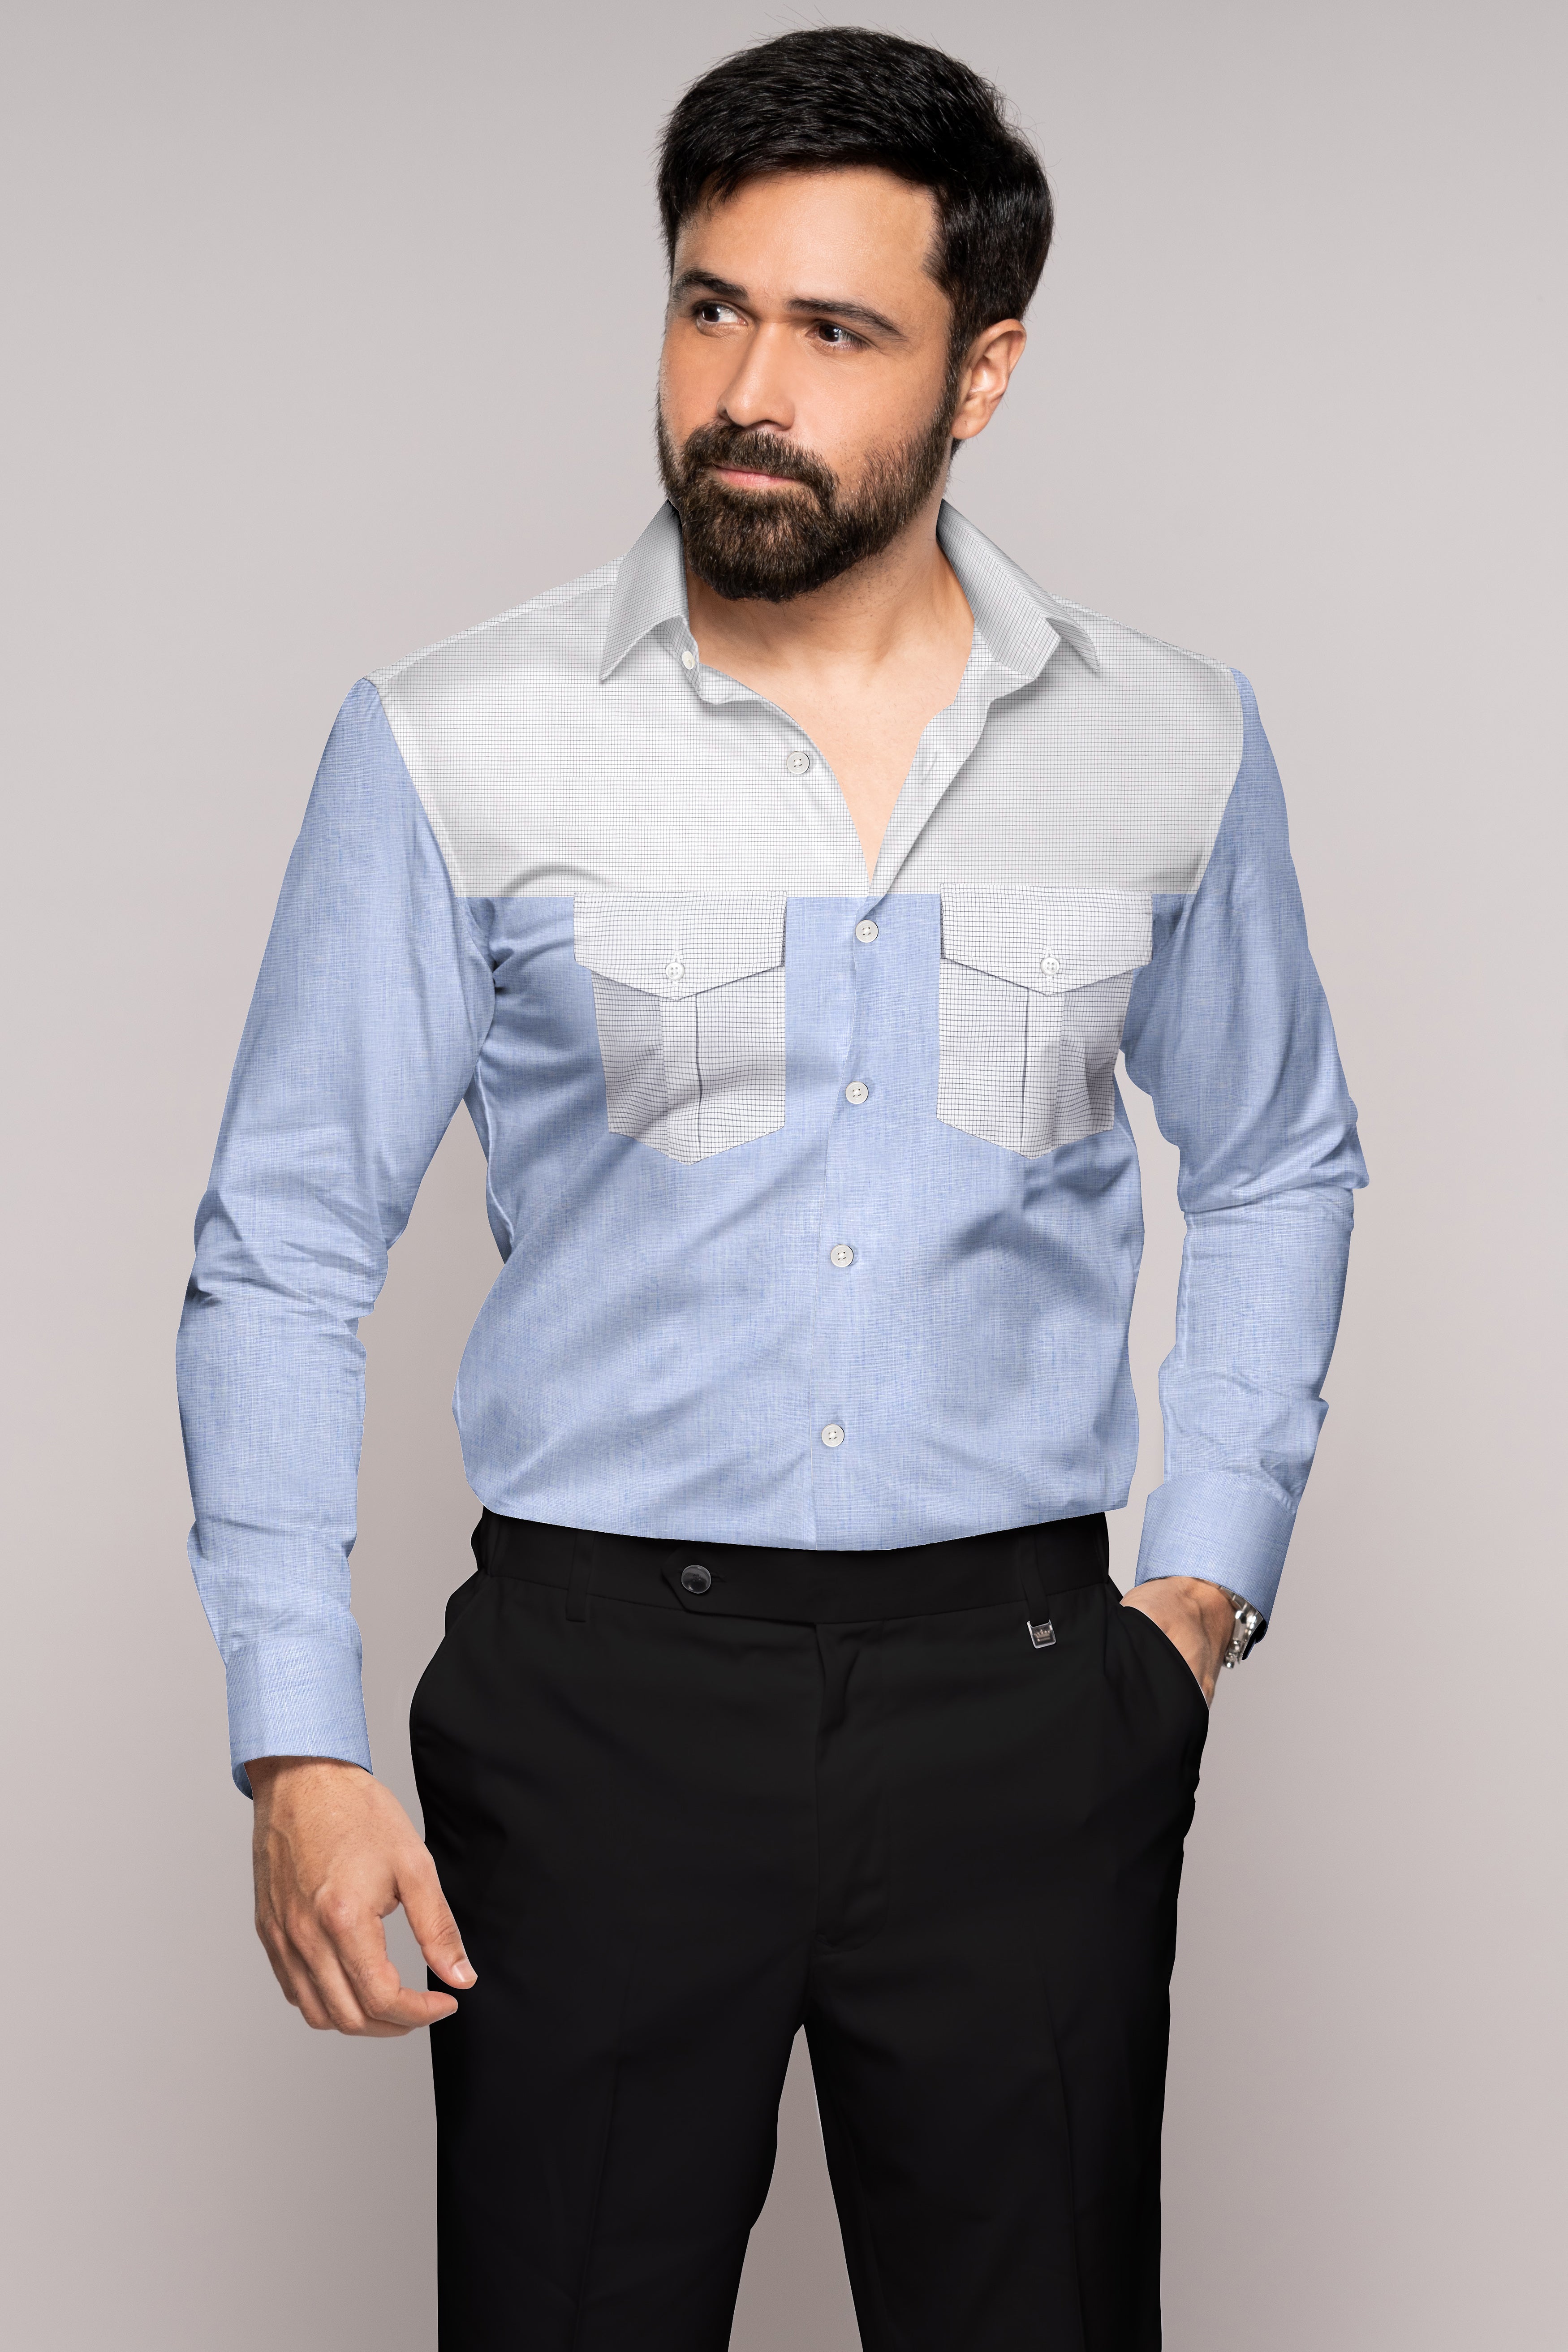 Off White with Pastel Blue Premium Cotton Designer Shirt